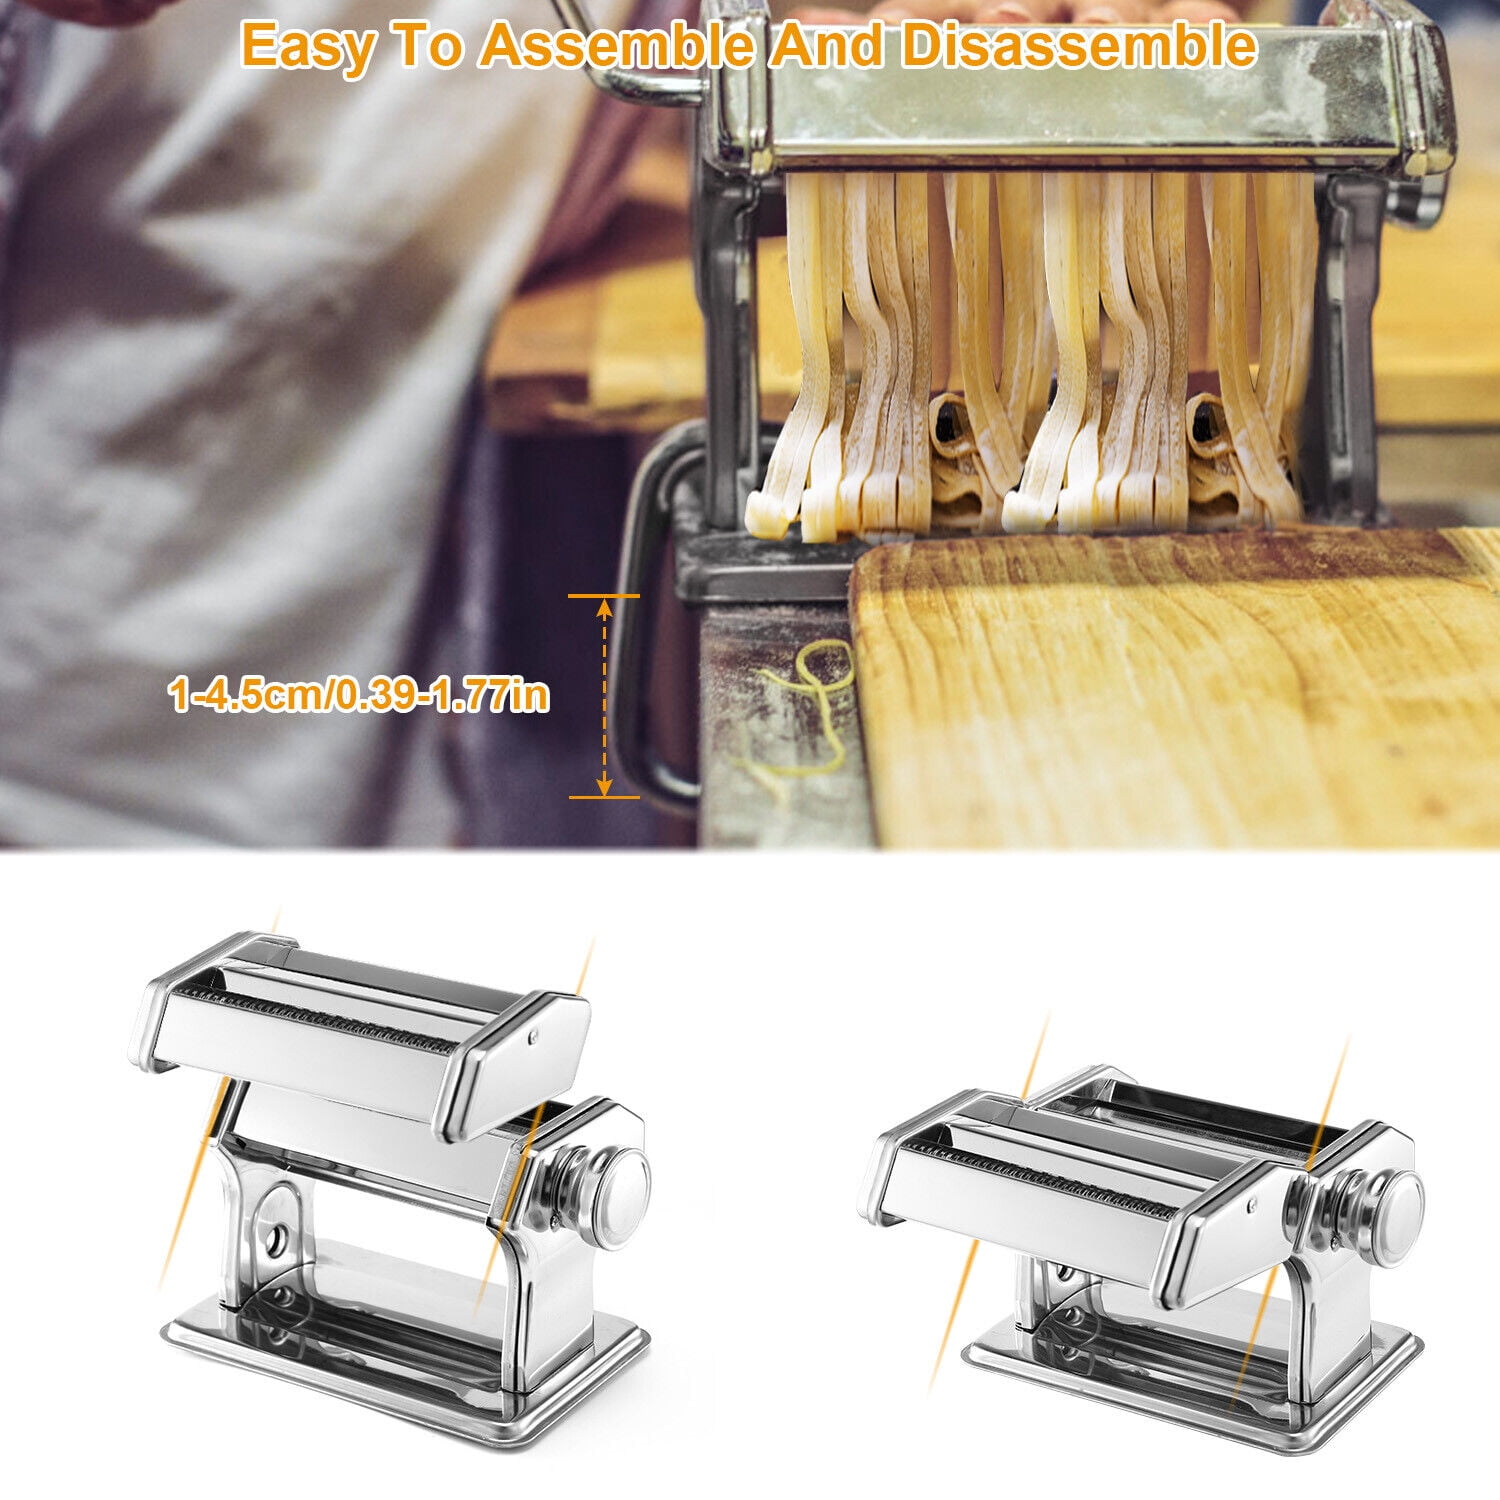 Premier Housewares Pasta Making Machine Manual Handle Pasta Roller Chrome  Pasta Cutter Steel Pasta Making Kit Pasta Roller Machine H15x W21 x D20